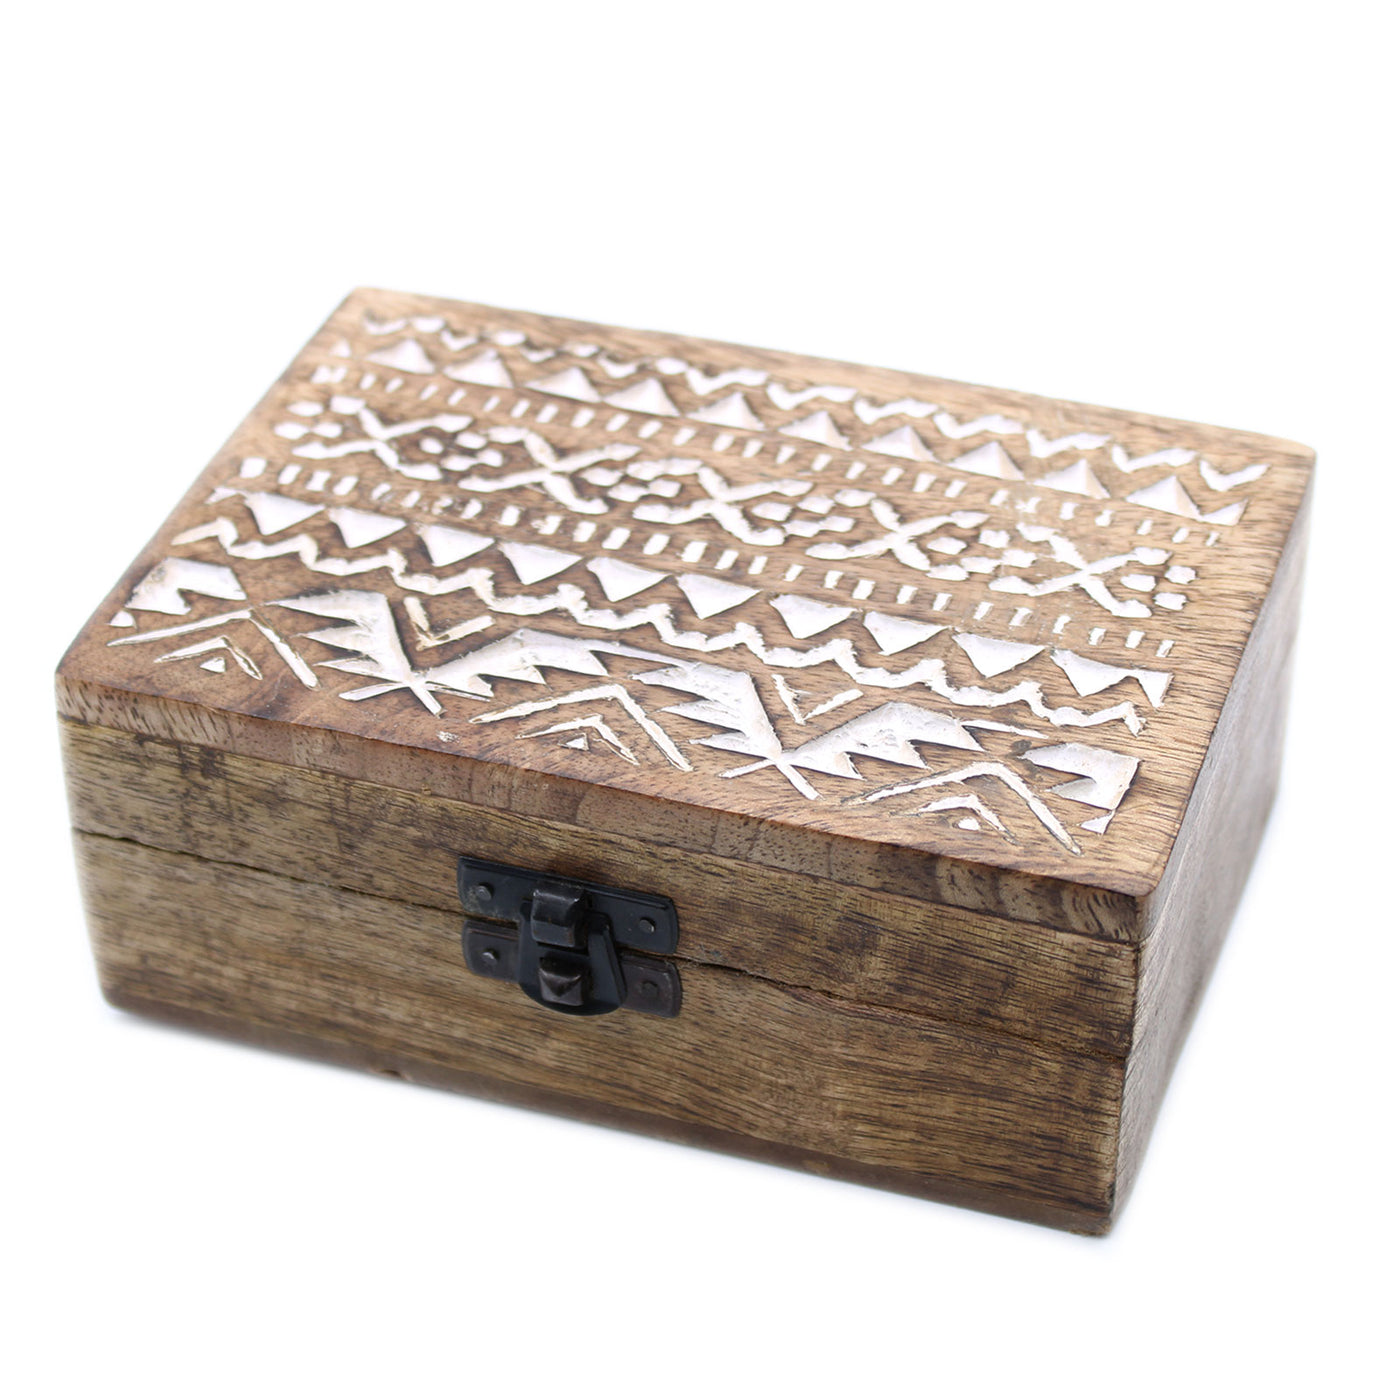 White Washed Wooden Storage Box - Slavic Design 6 x 4 Inch. 